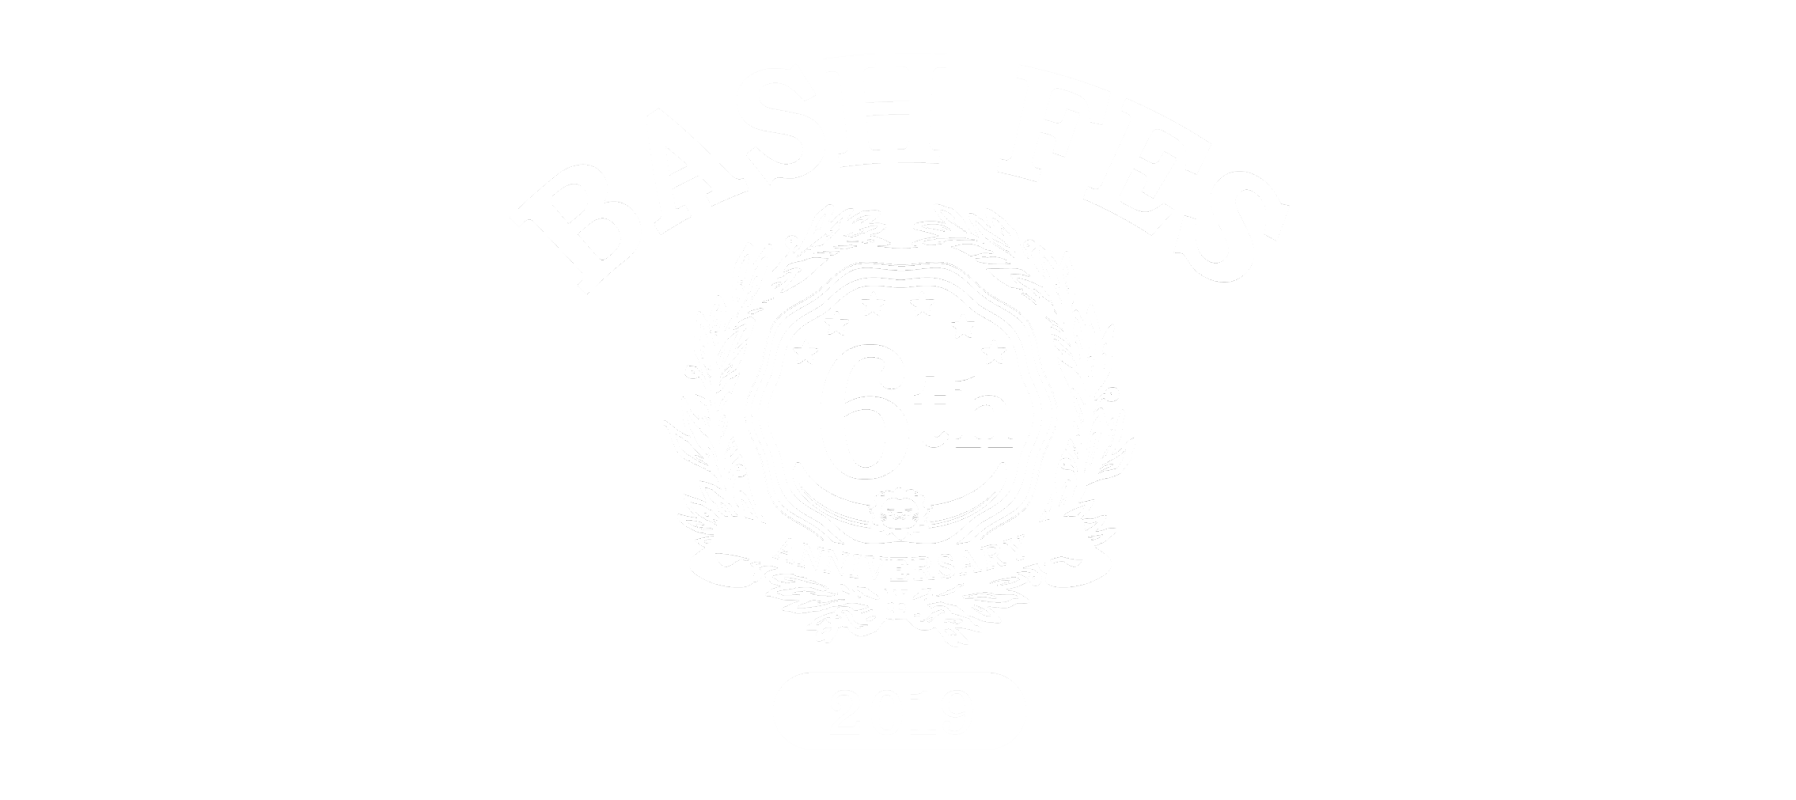 BASH FES 2017